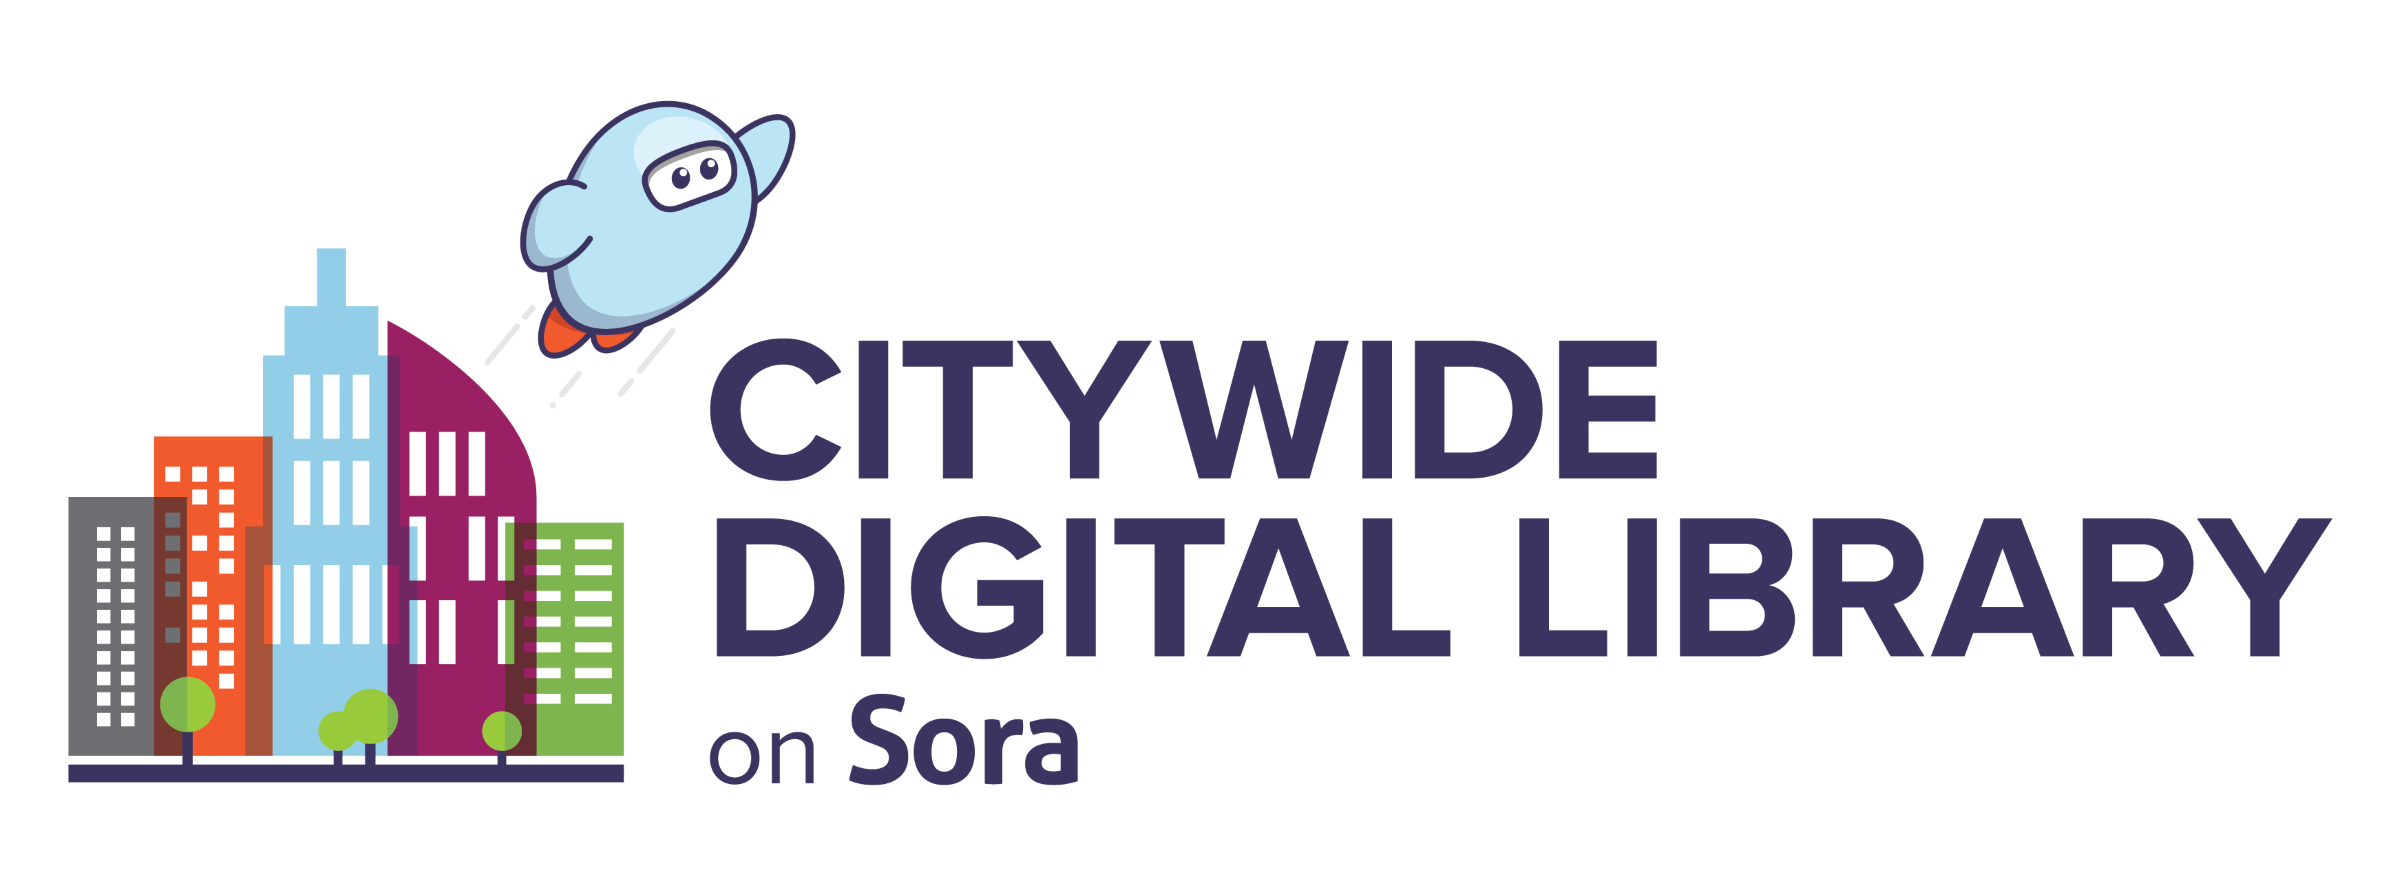 Citywide Digital Library on Sora